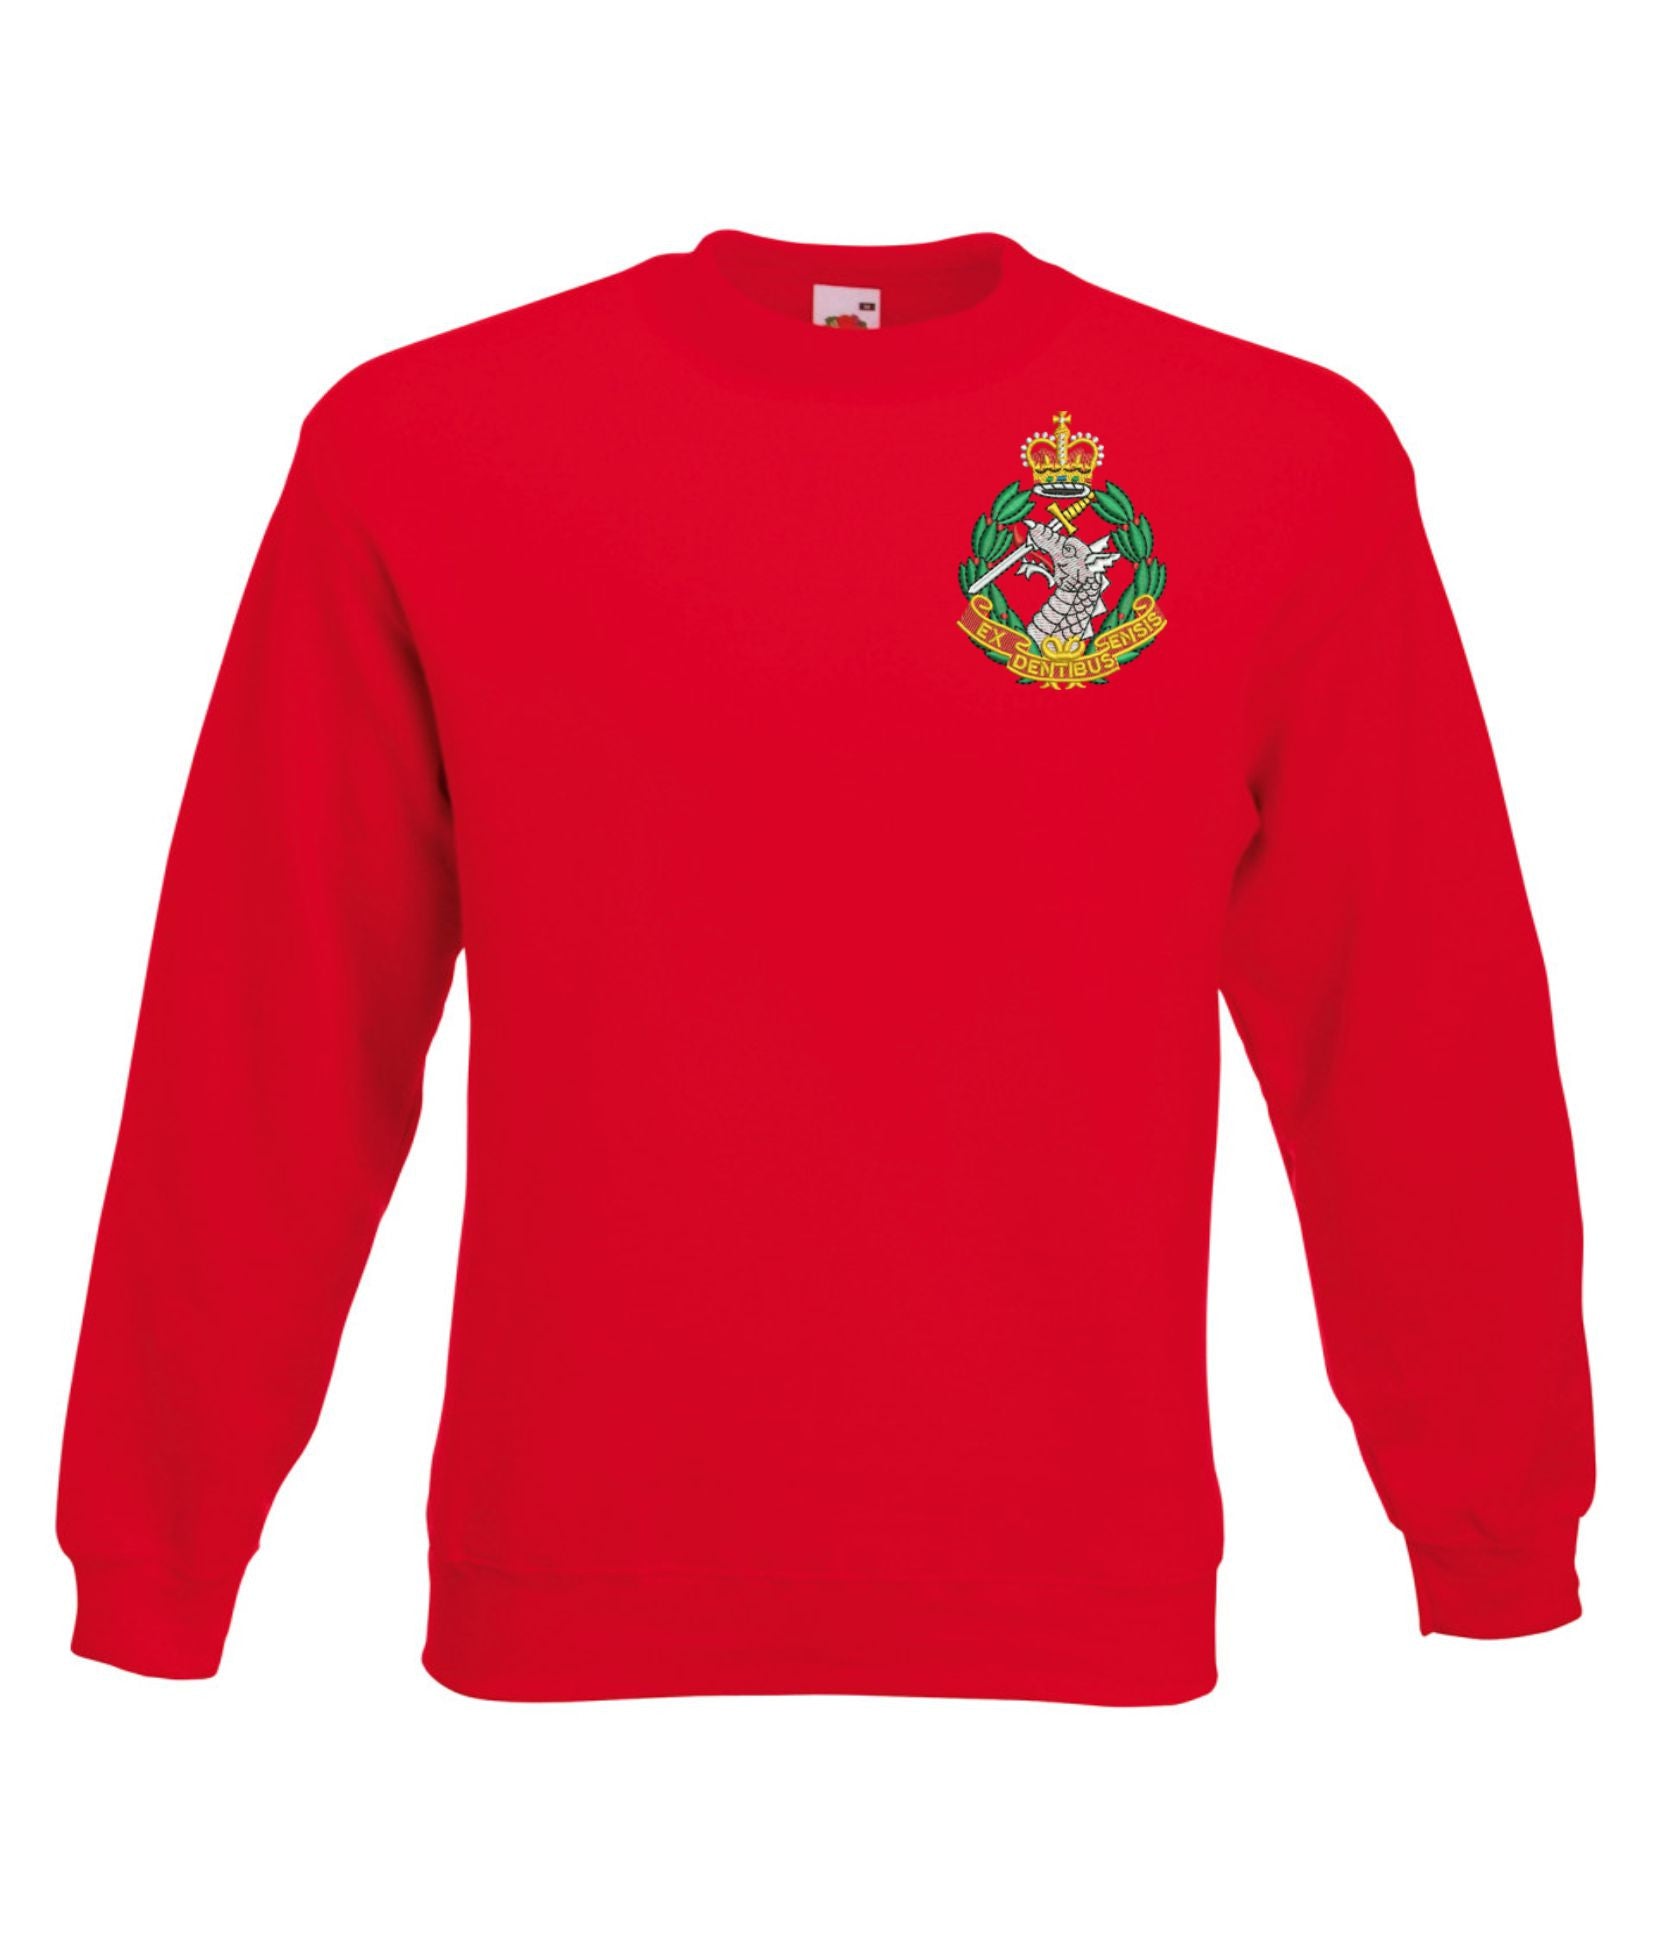 Royal Army Dental Corp Sweatshirt